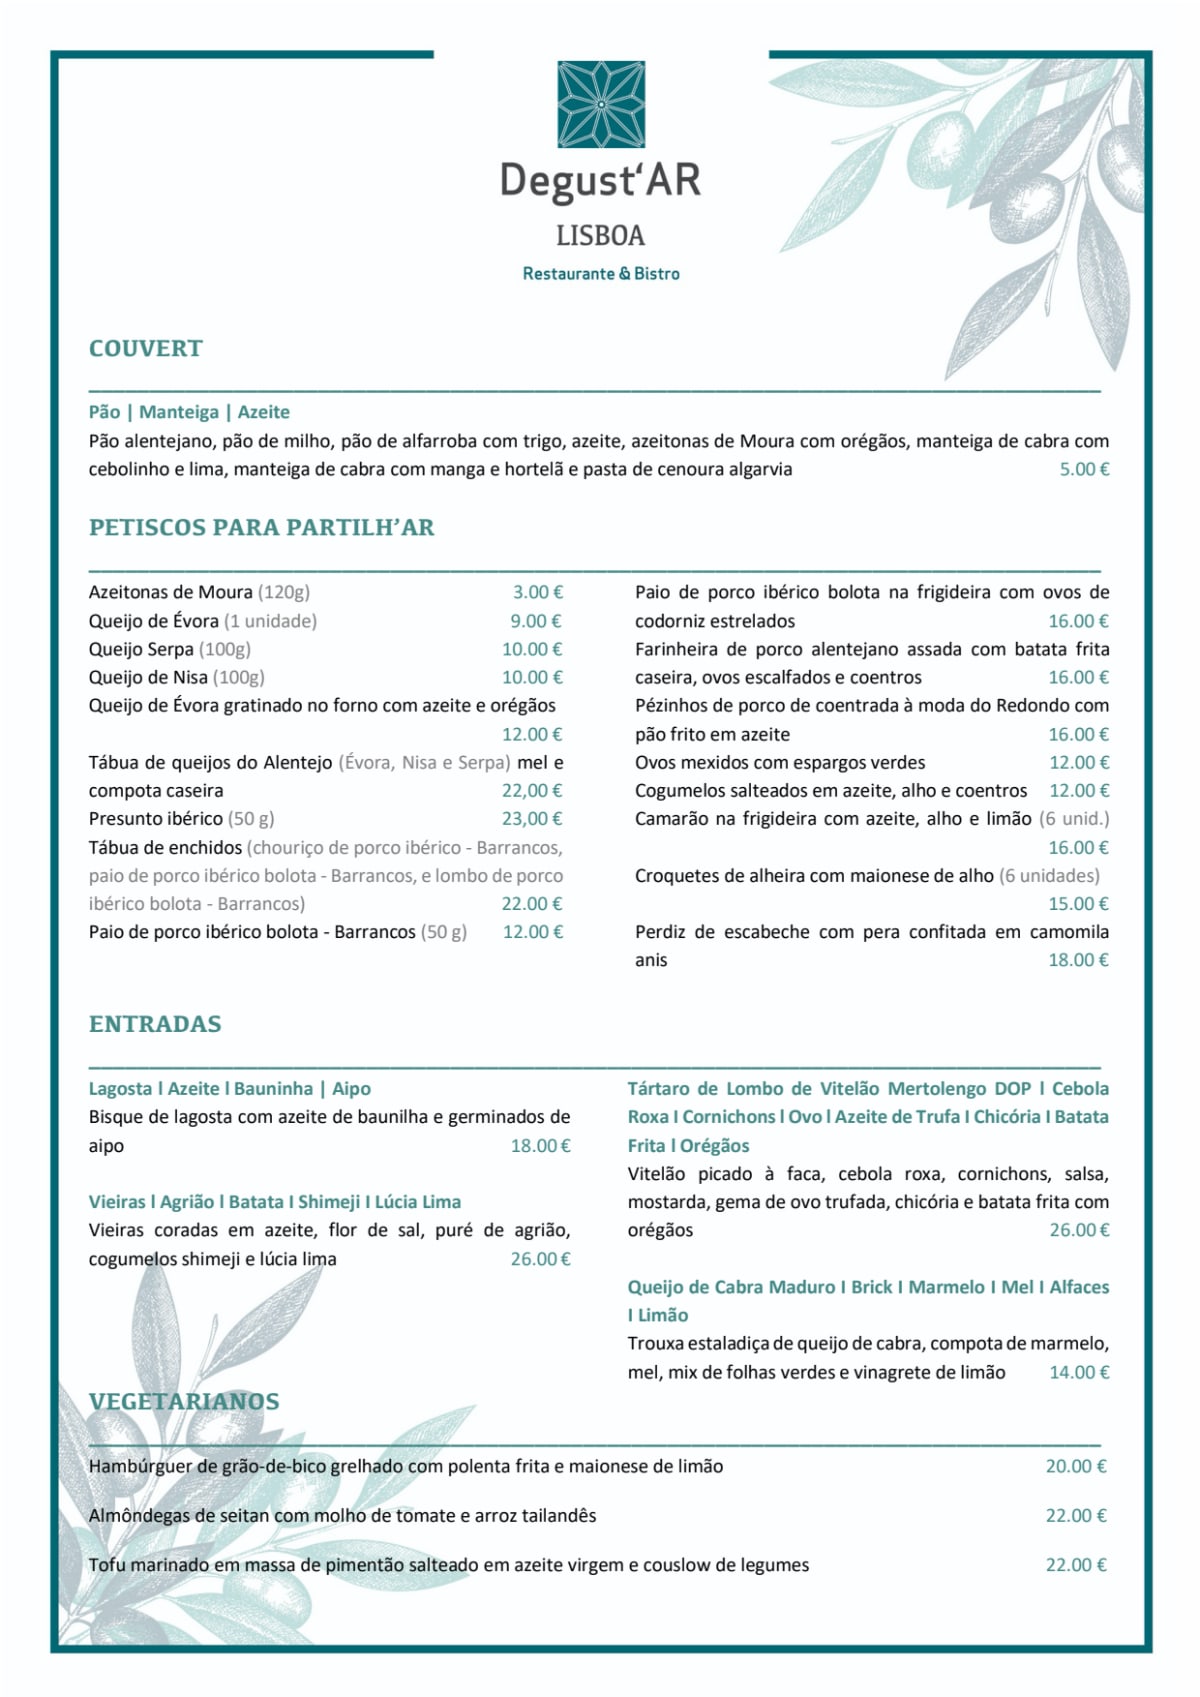 DegustAR Lisboa menu